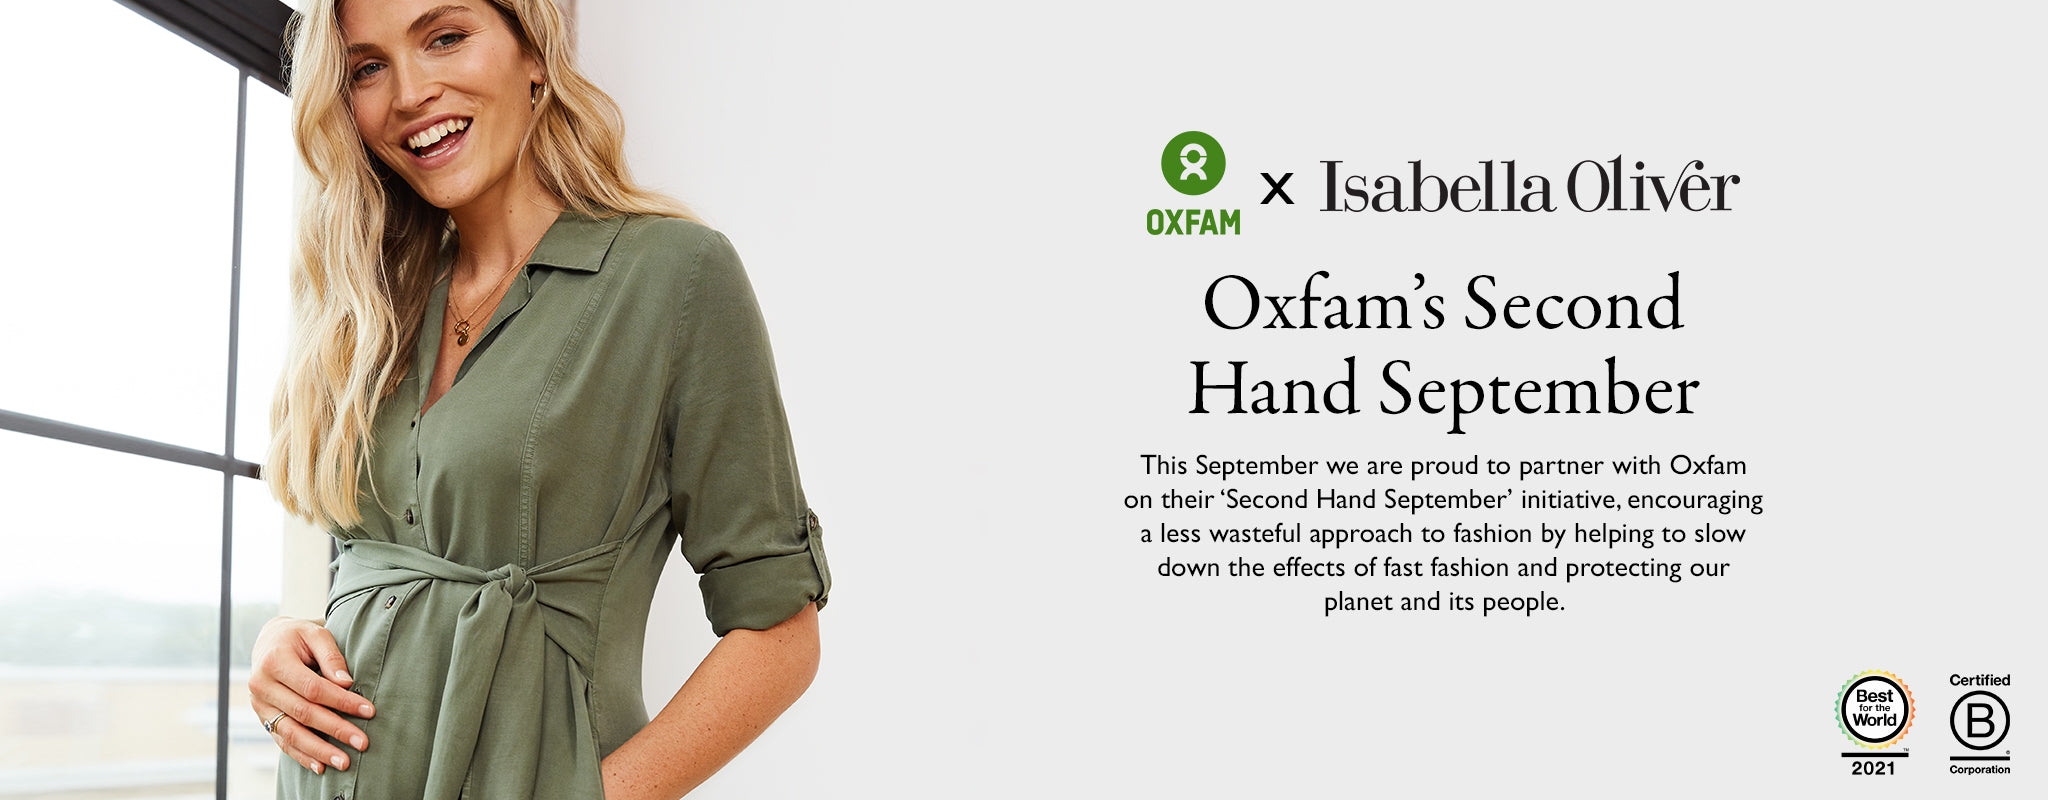 Oxfam x Isabella Oliver - Second Hand September